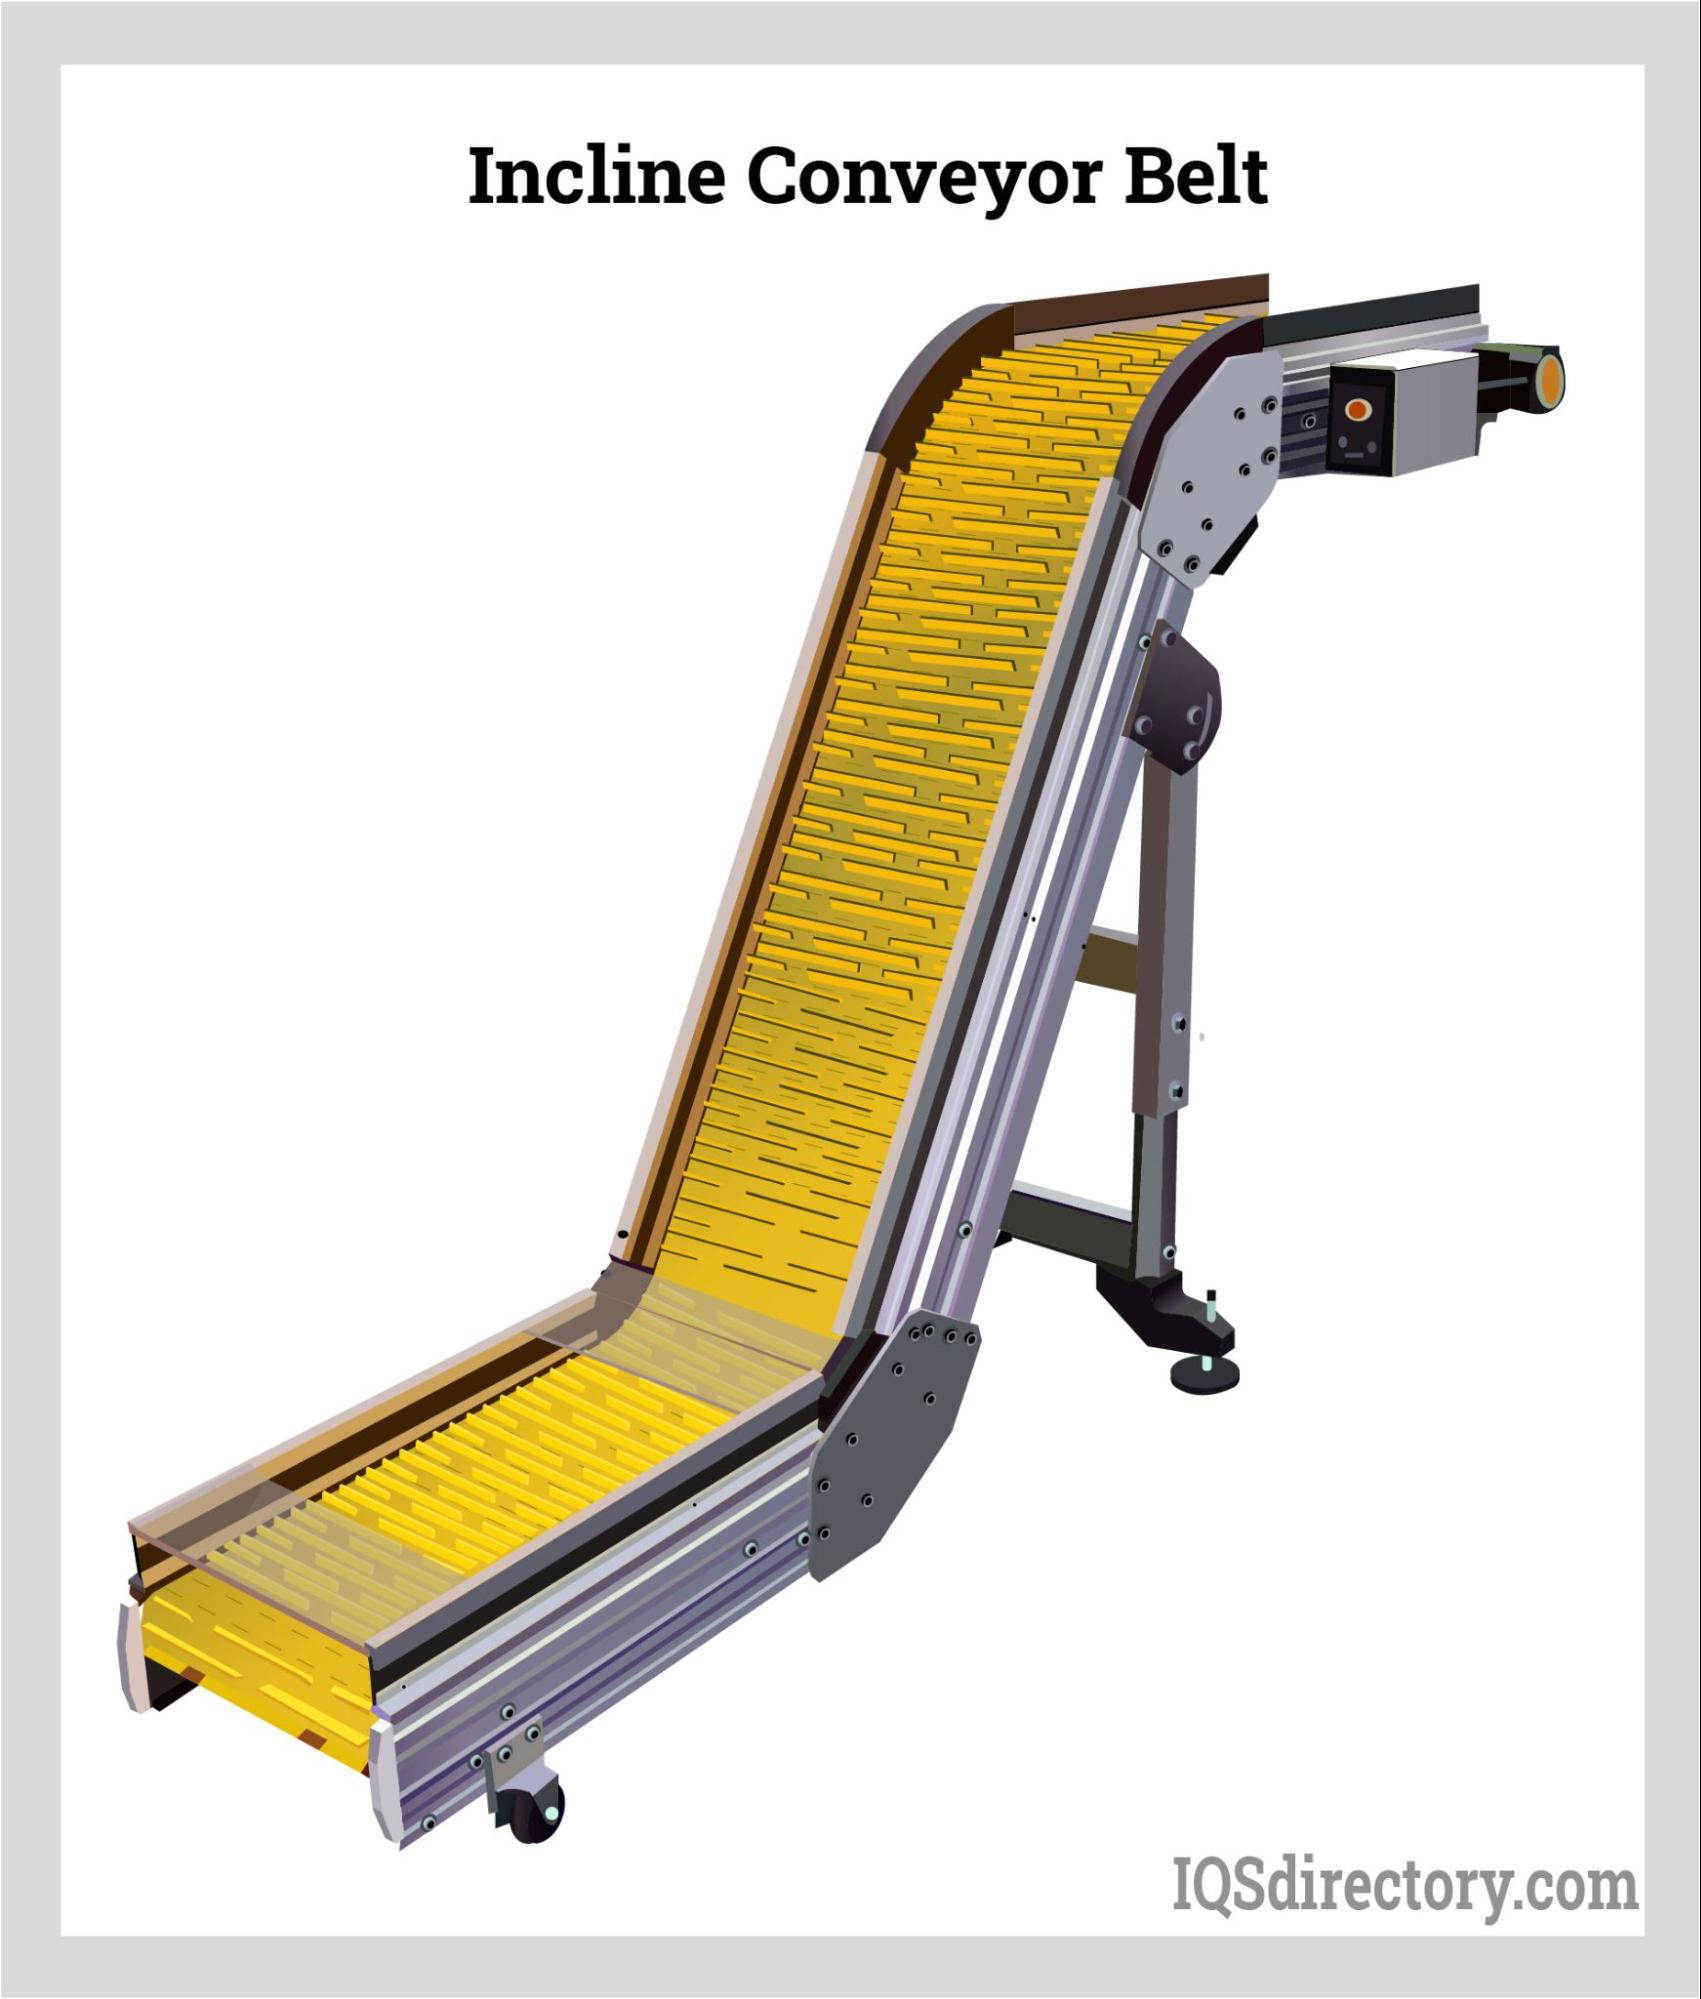 Incline Conveyor Belt